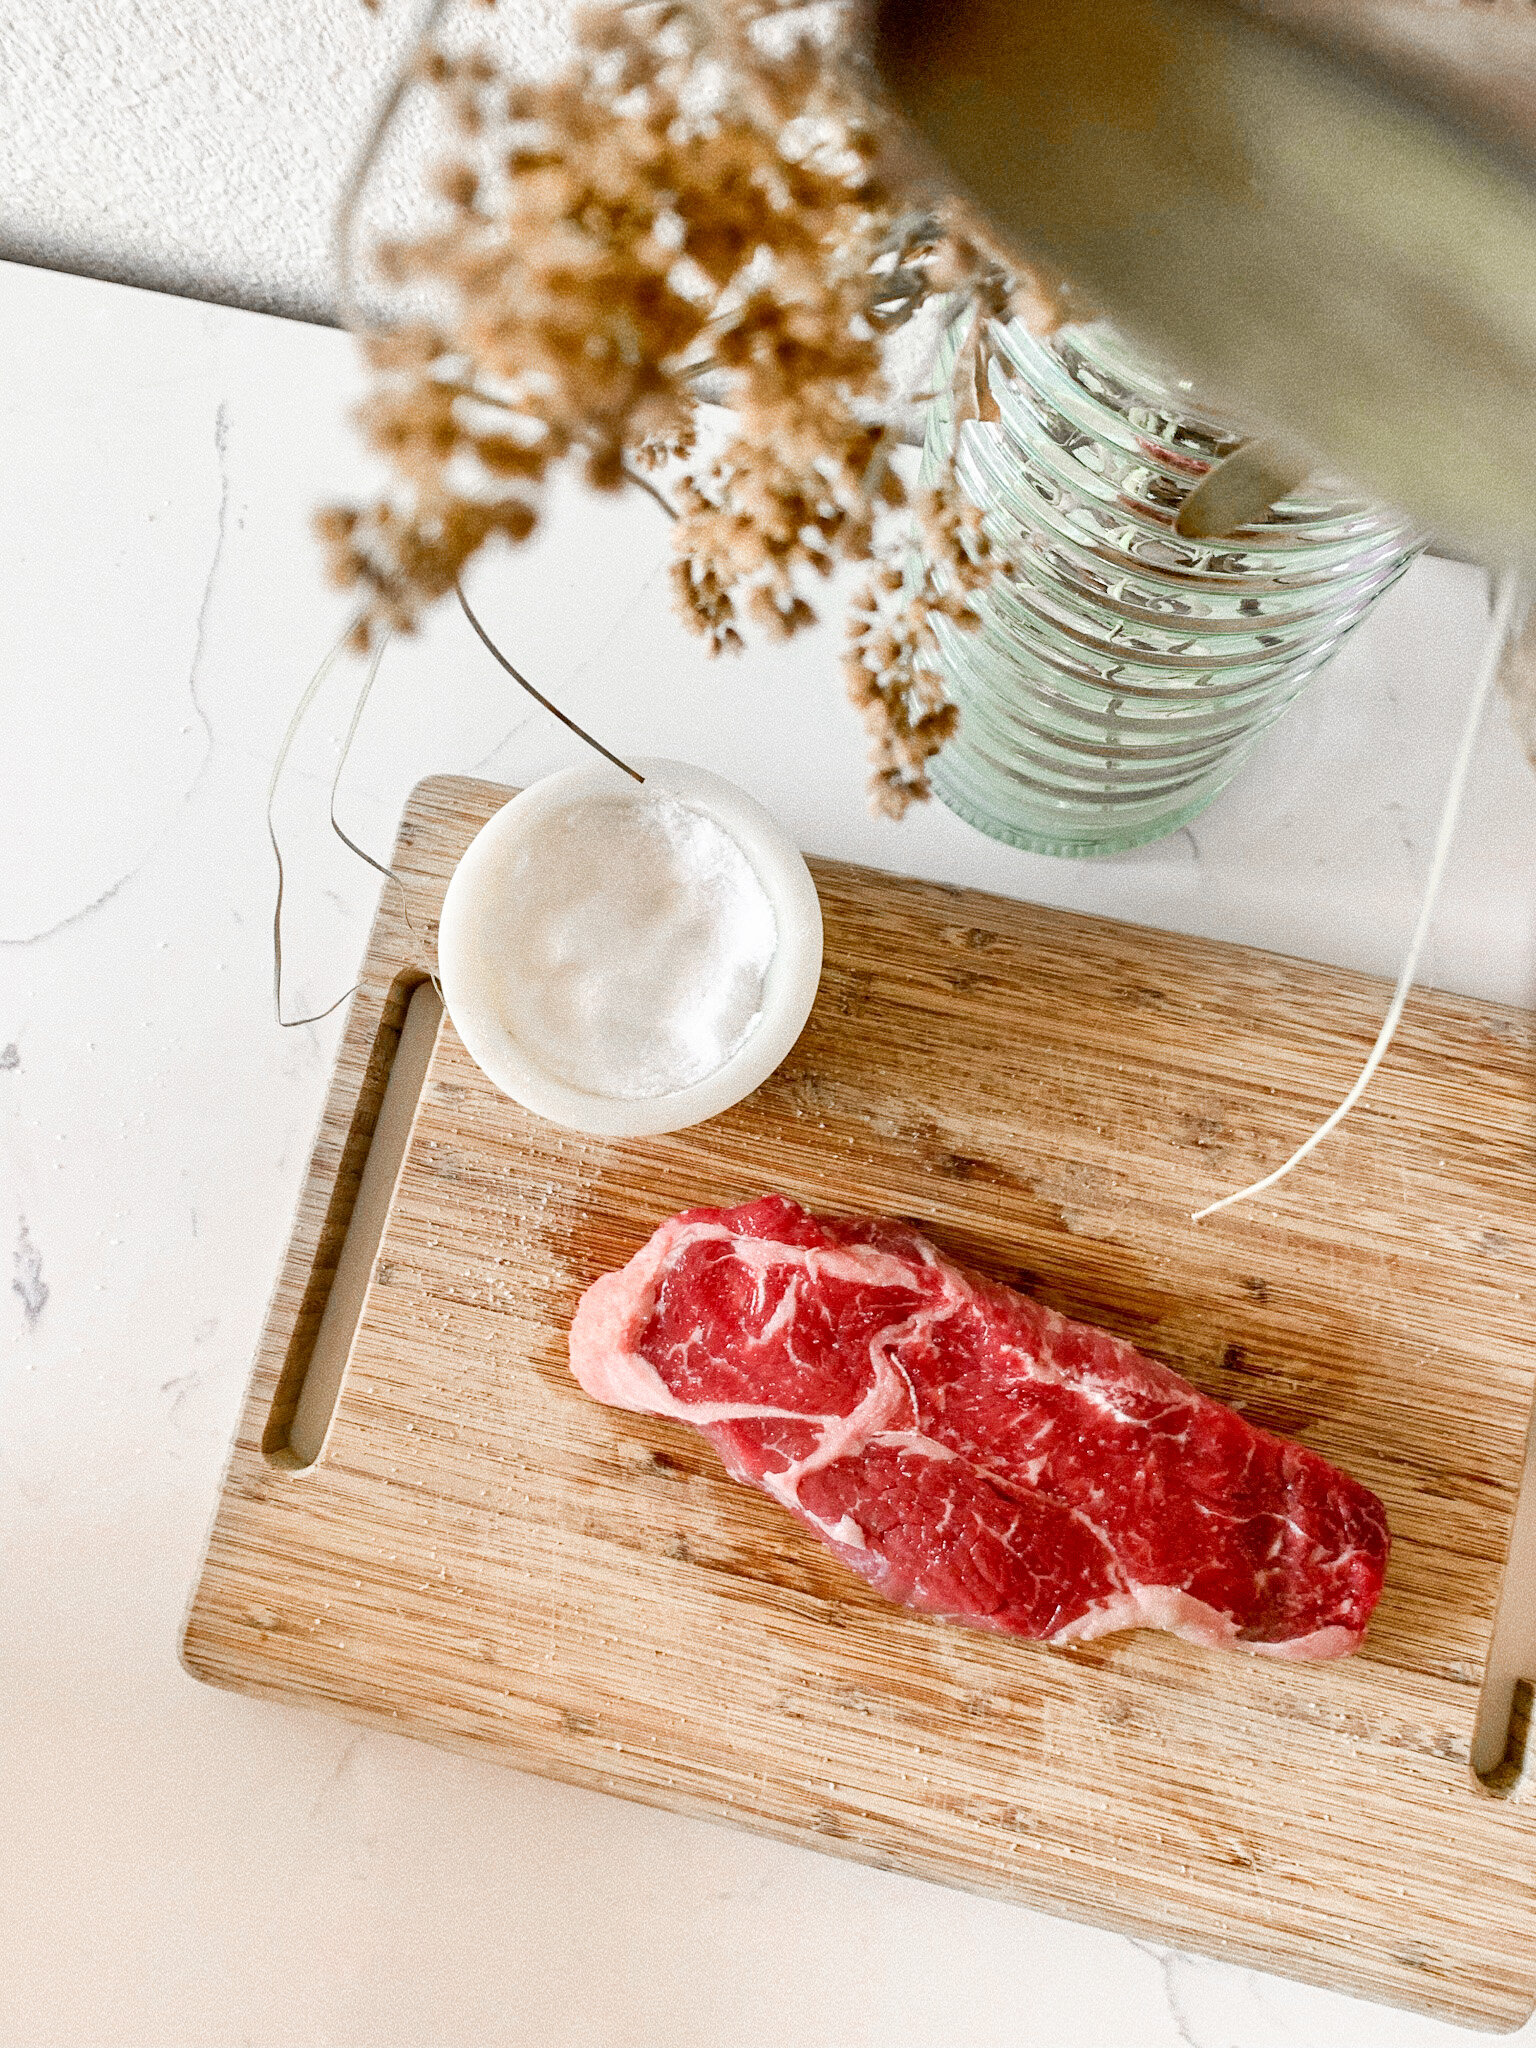 Seasoning the NY-strip steak with salt